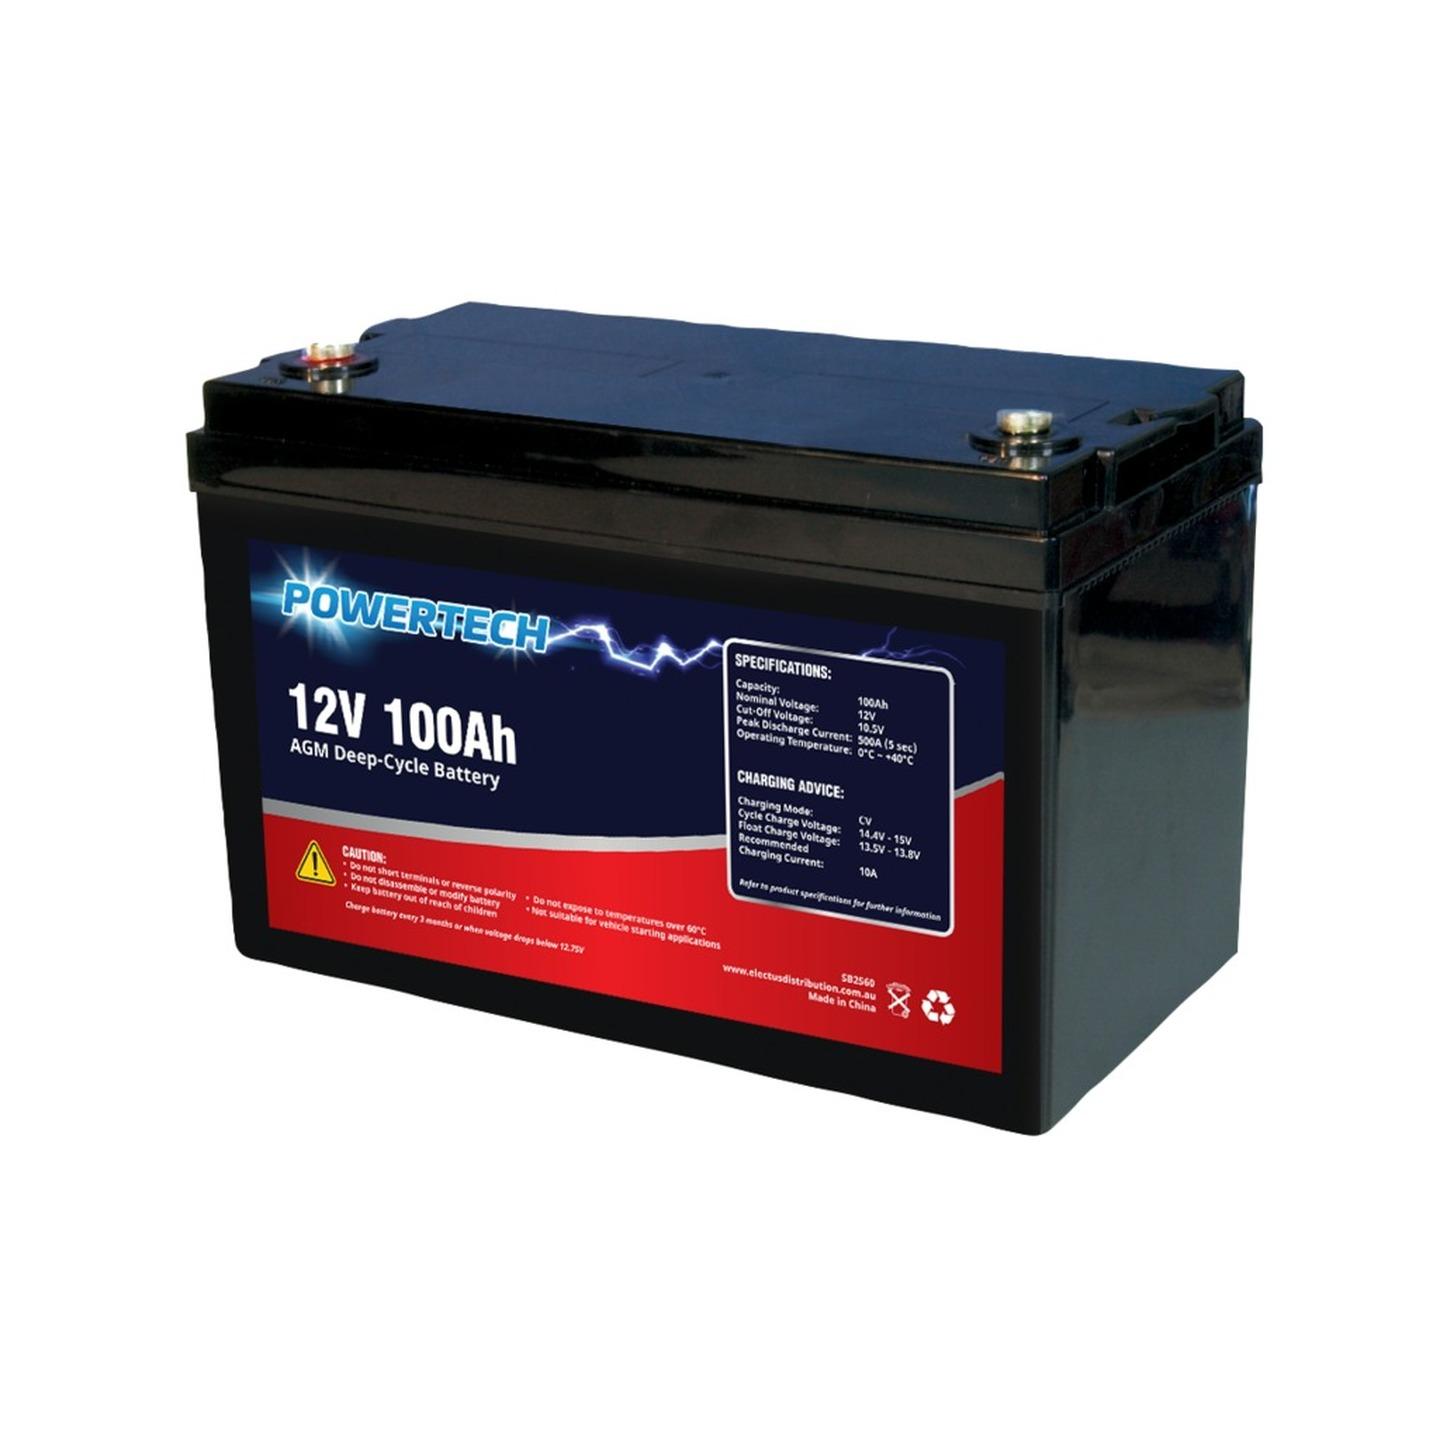 12V 100Ah AGM Deep Cycle Battery